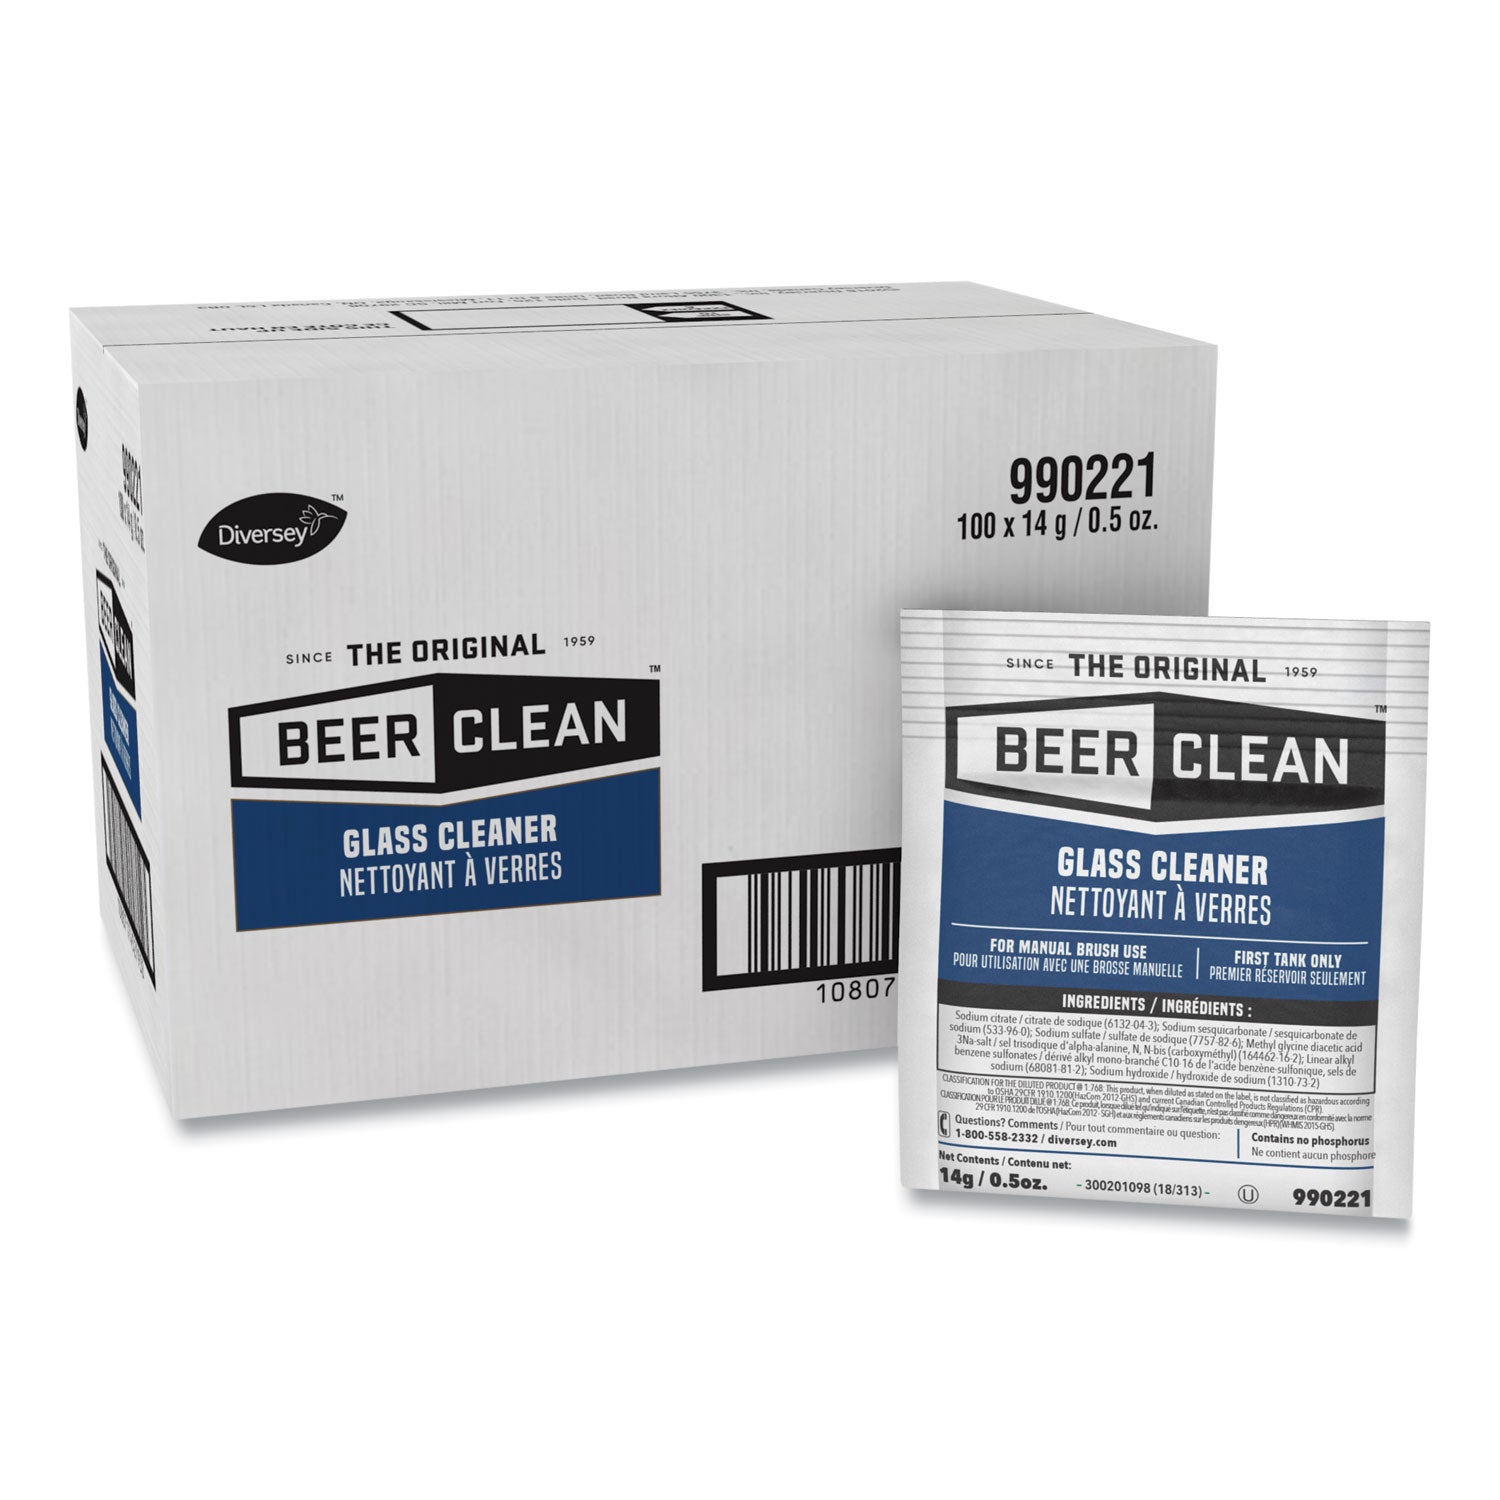 beer-clean-glass-cleaner-powder-05-oz-packet-100-carton_dvo990221 - 1